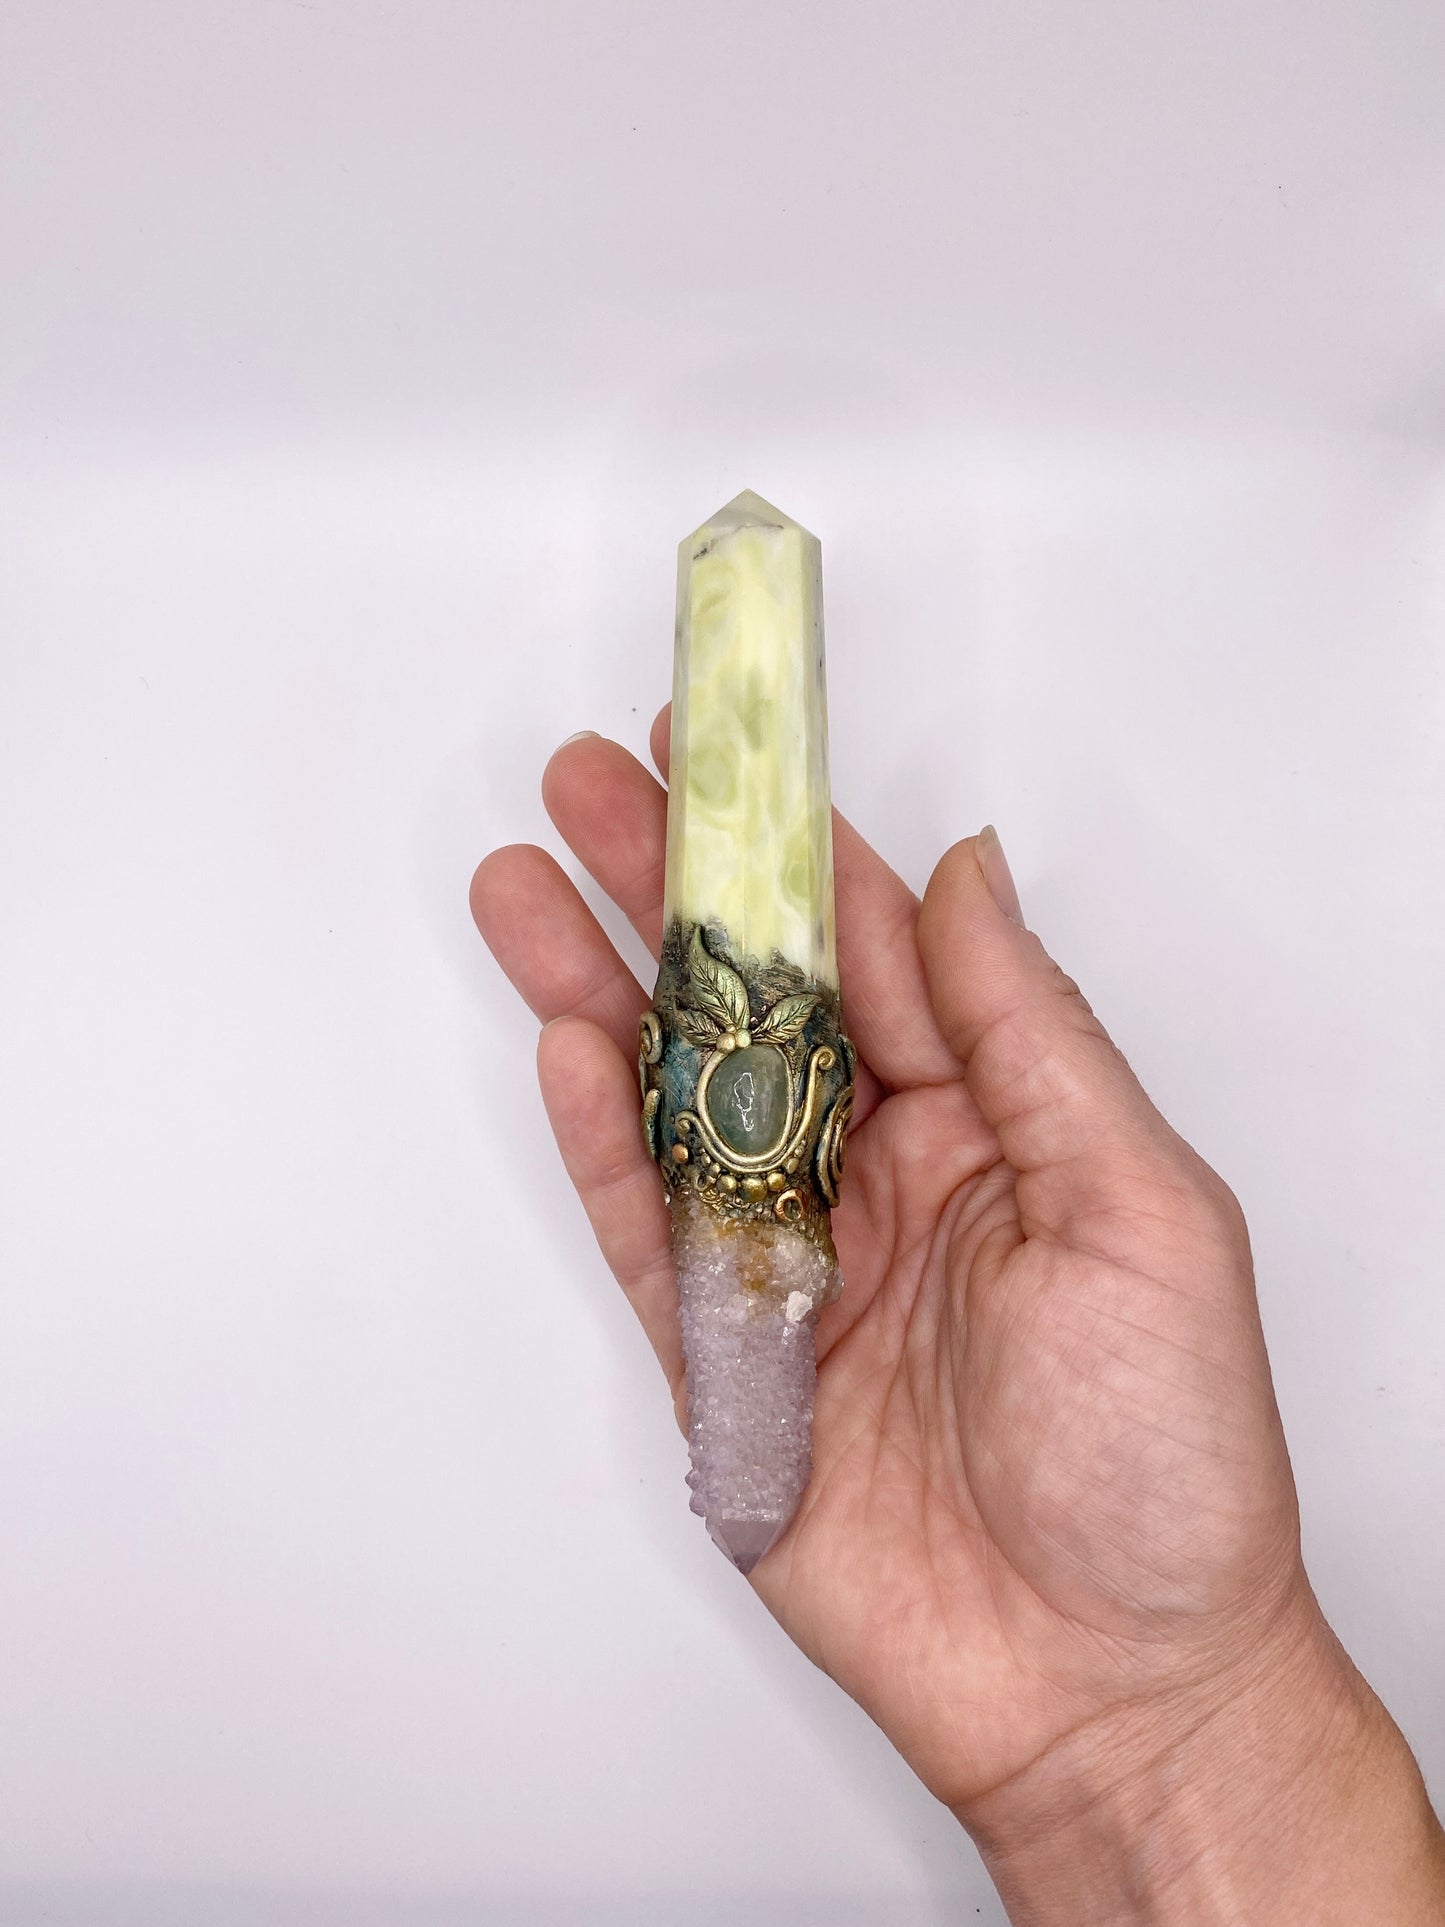 Crystal Energy Wand with Serpentine, Aquamarine and Amethyst Spirit Quartz - Reversible Metaphysical Wand